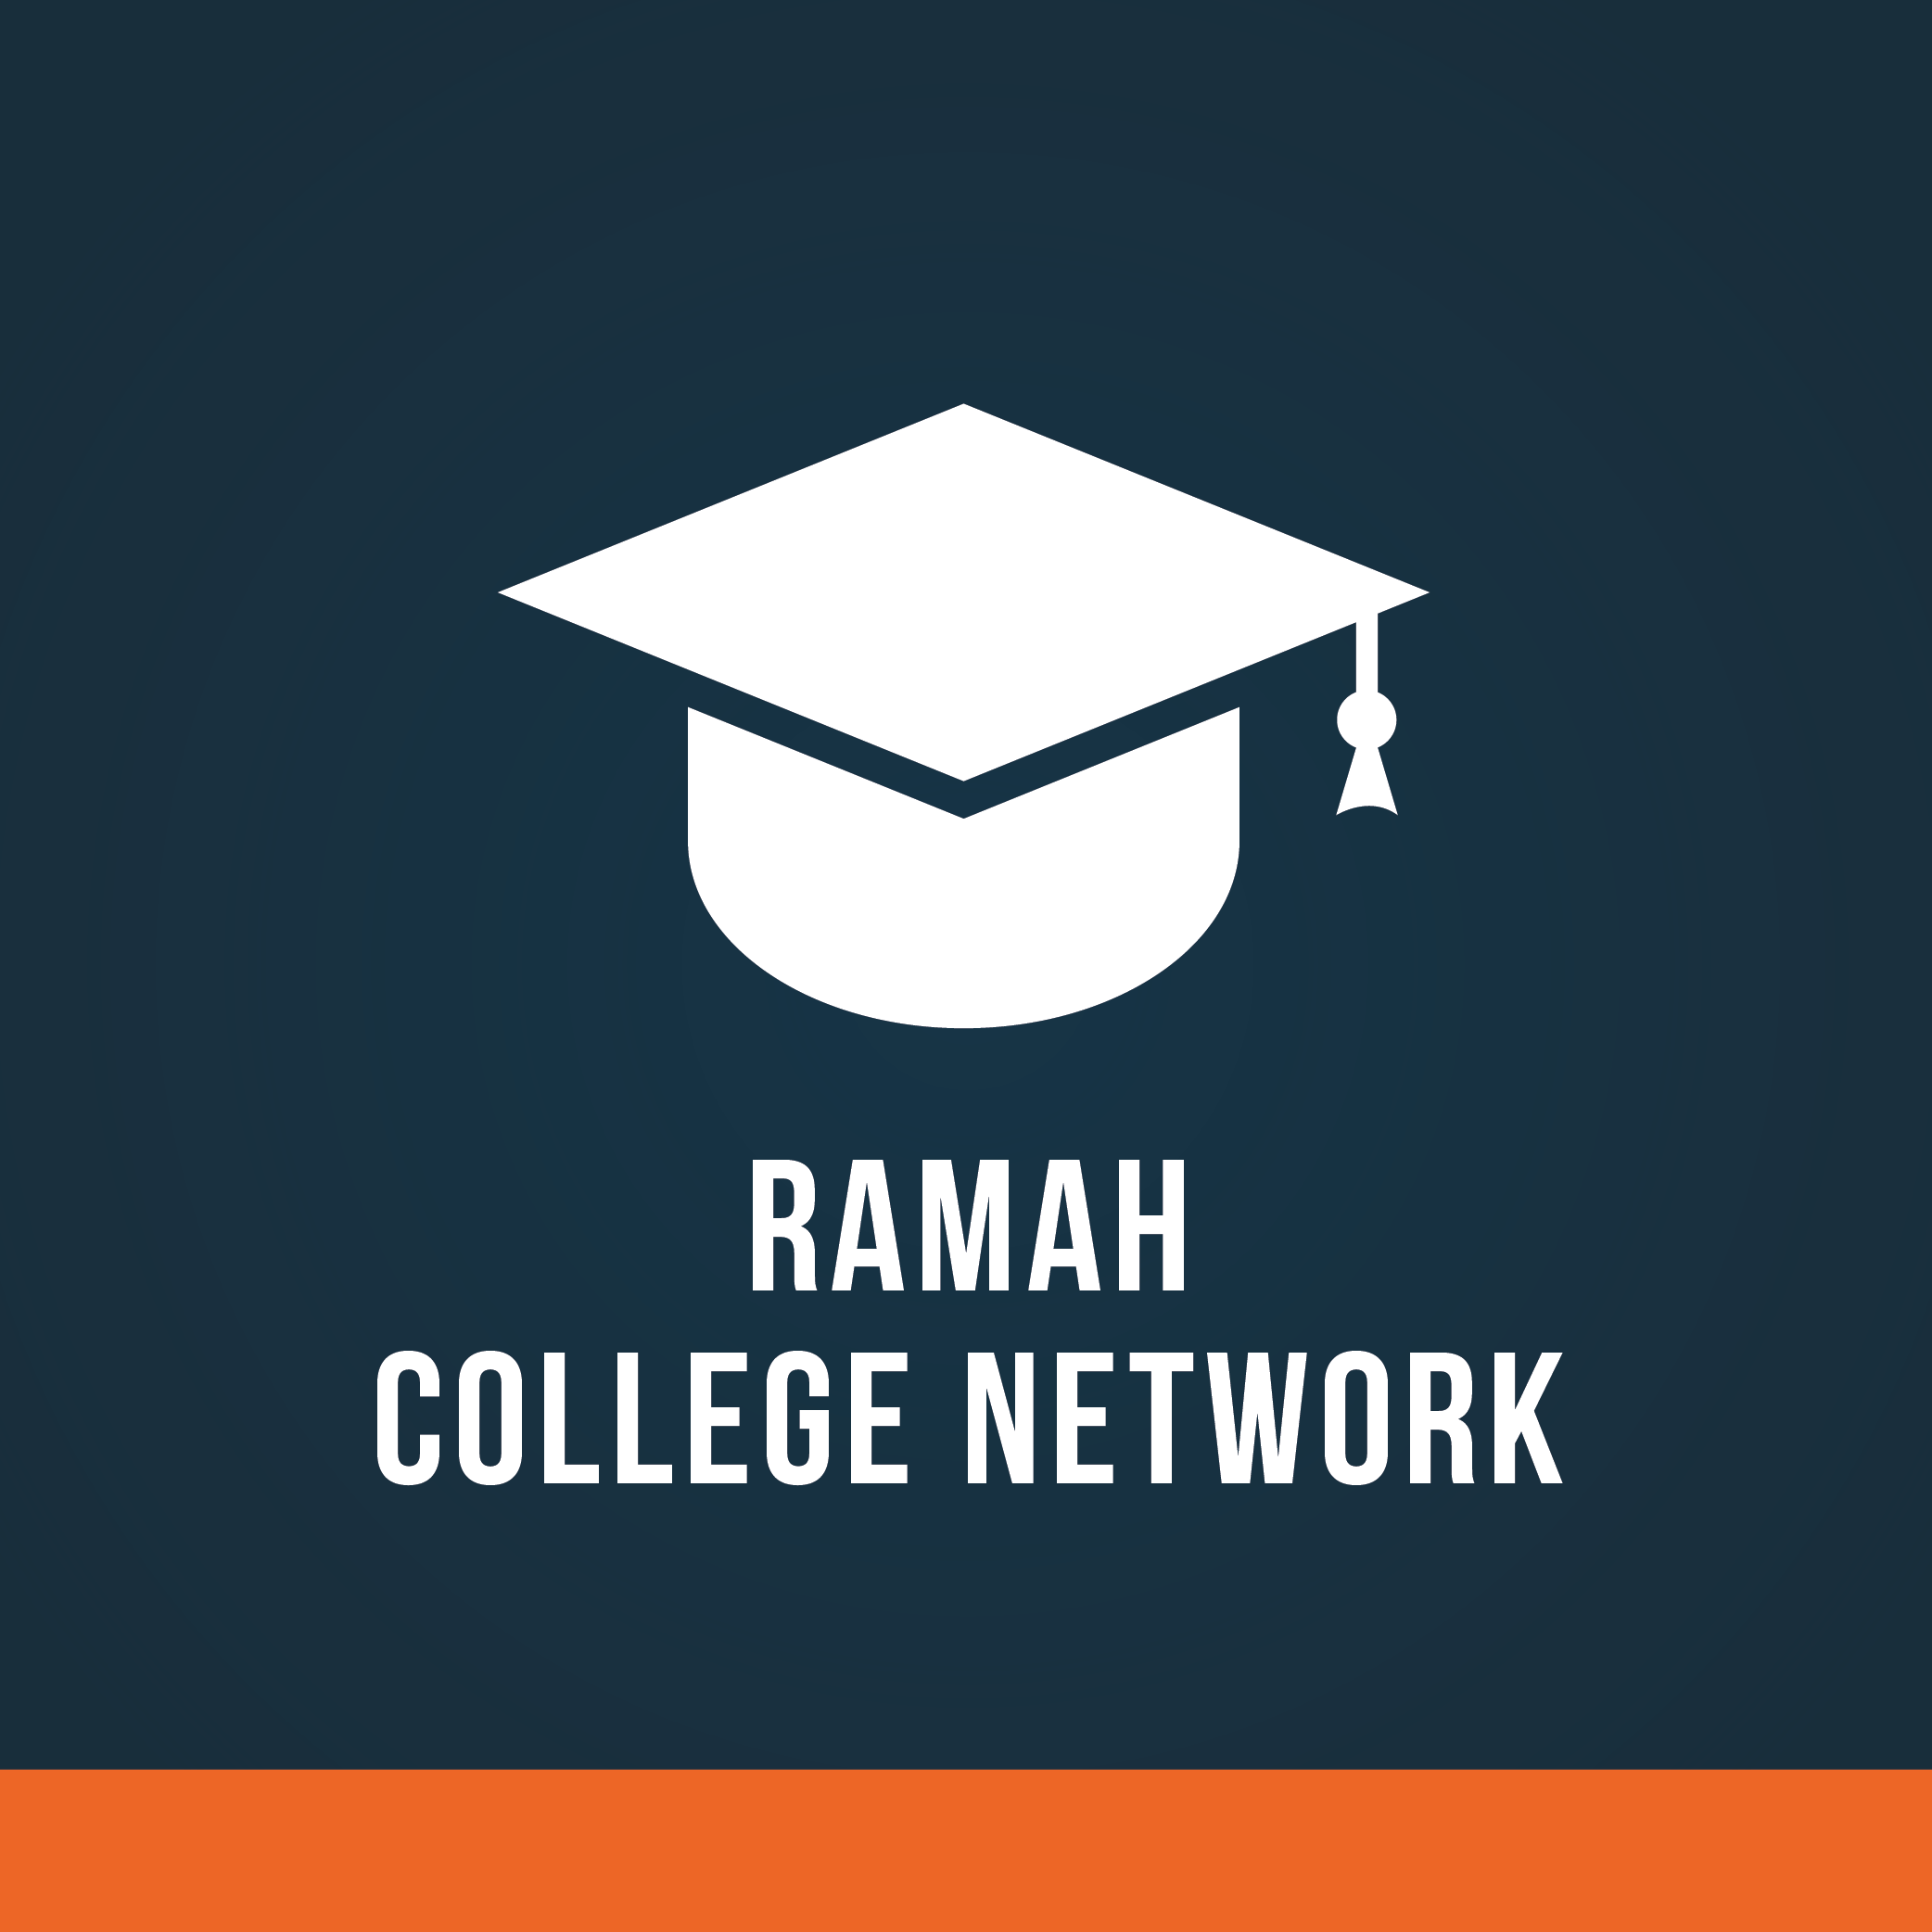 Ramah College Network